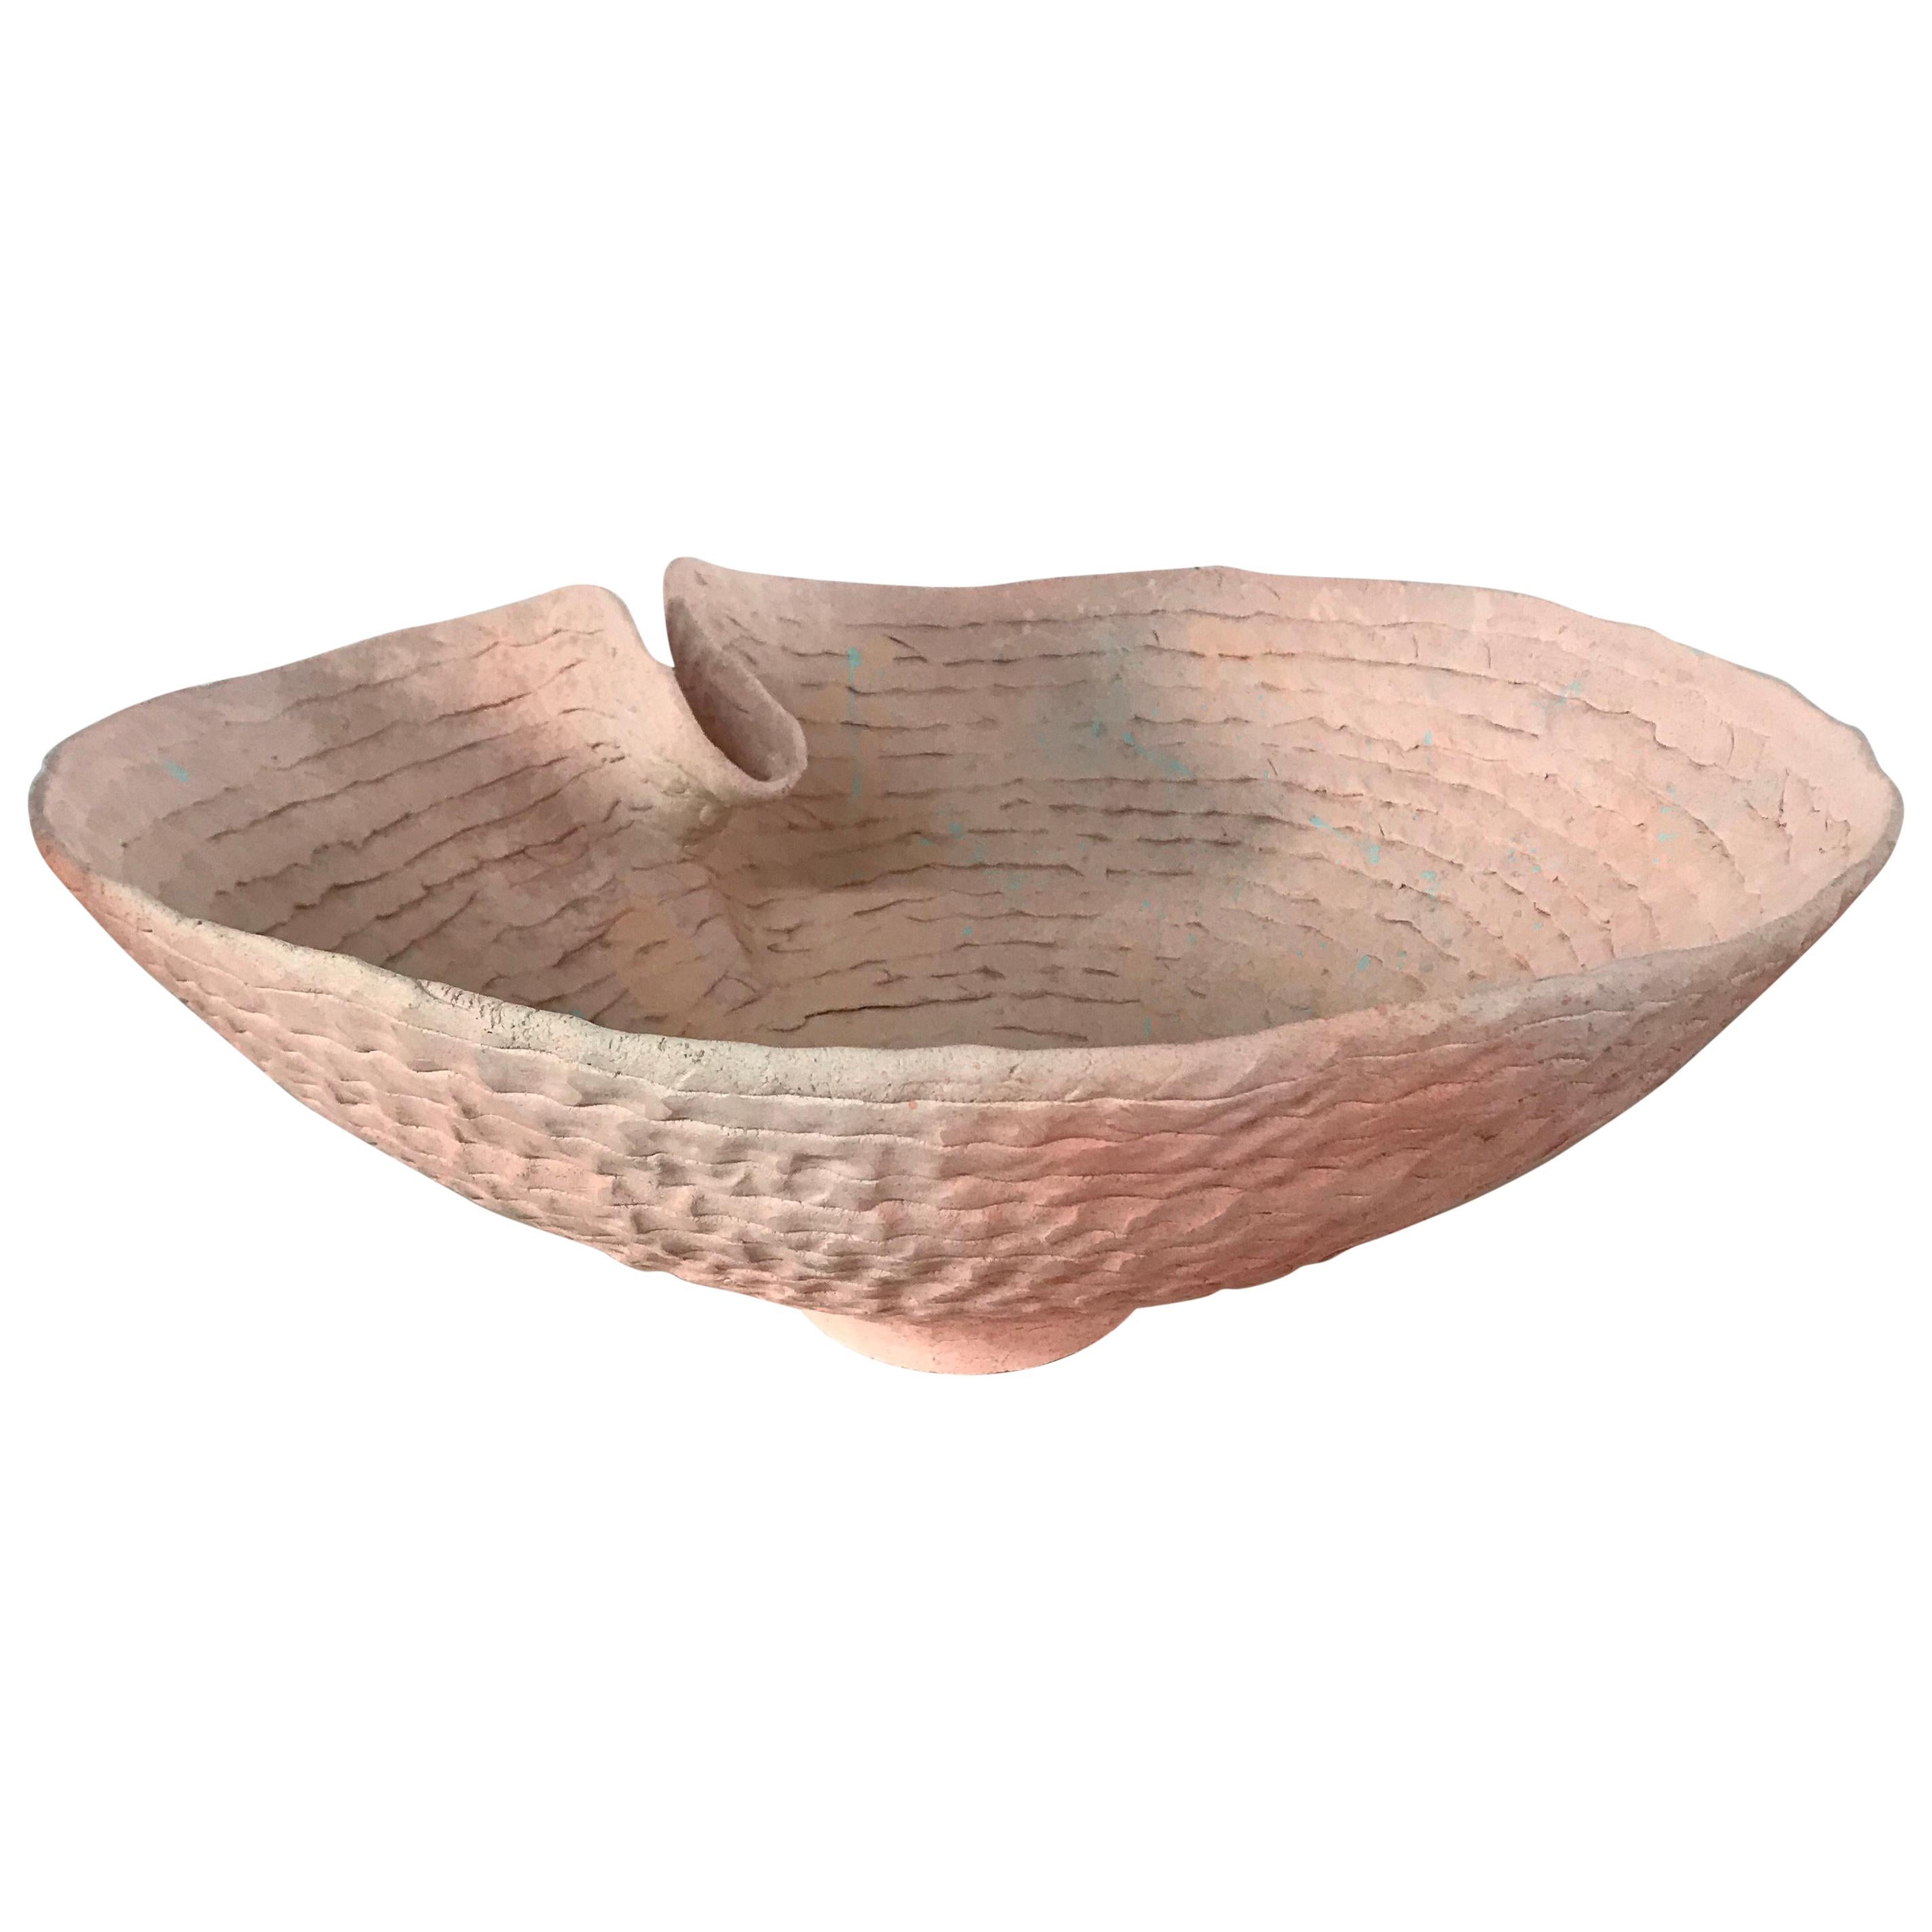 Artist Made Ceramic Bowl, Signed Terry